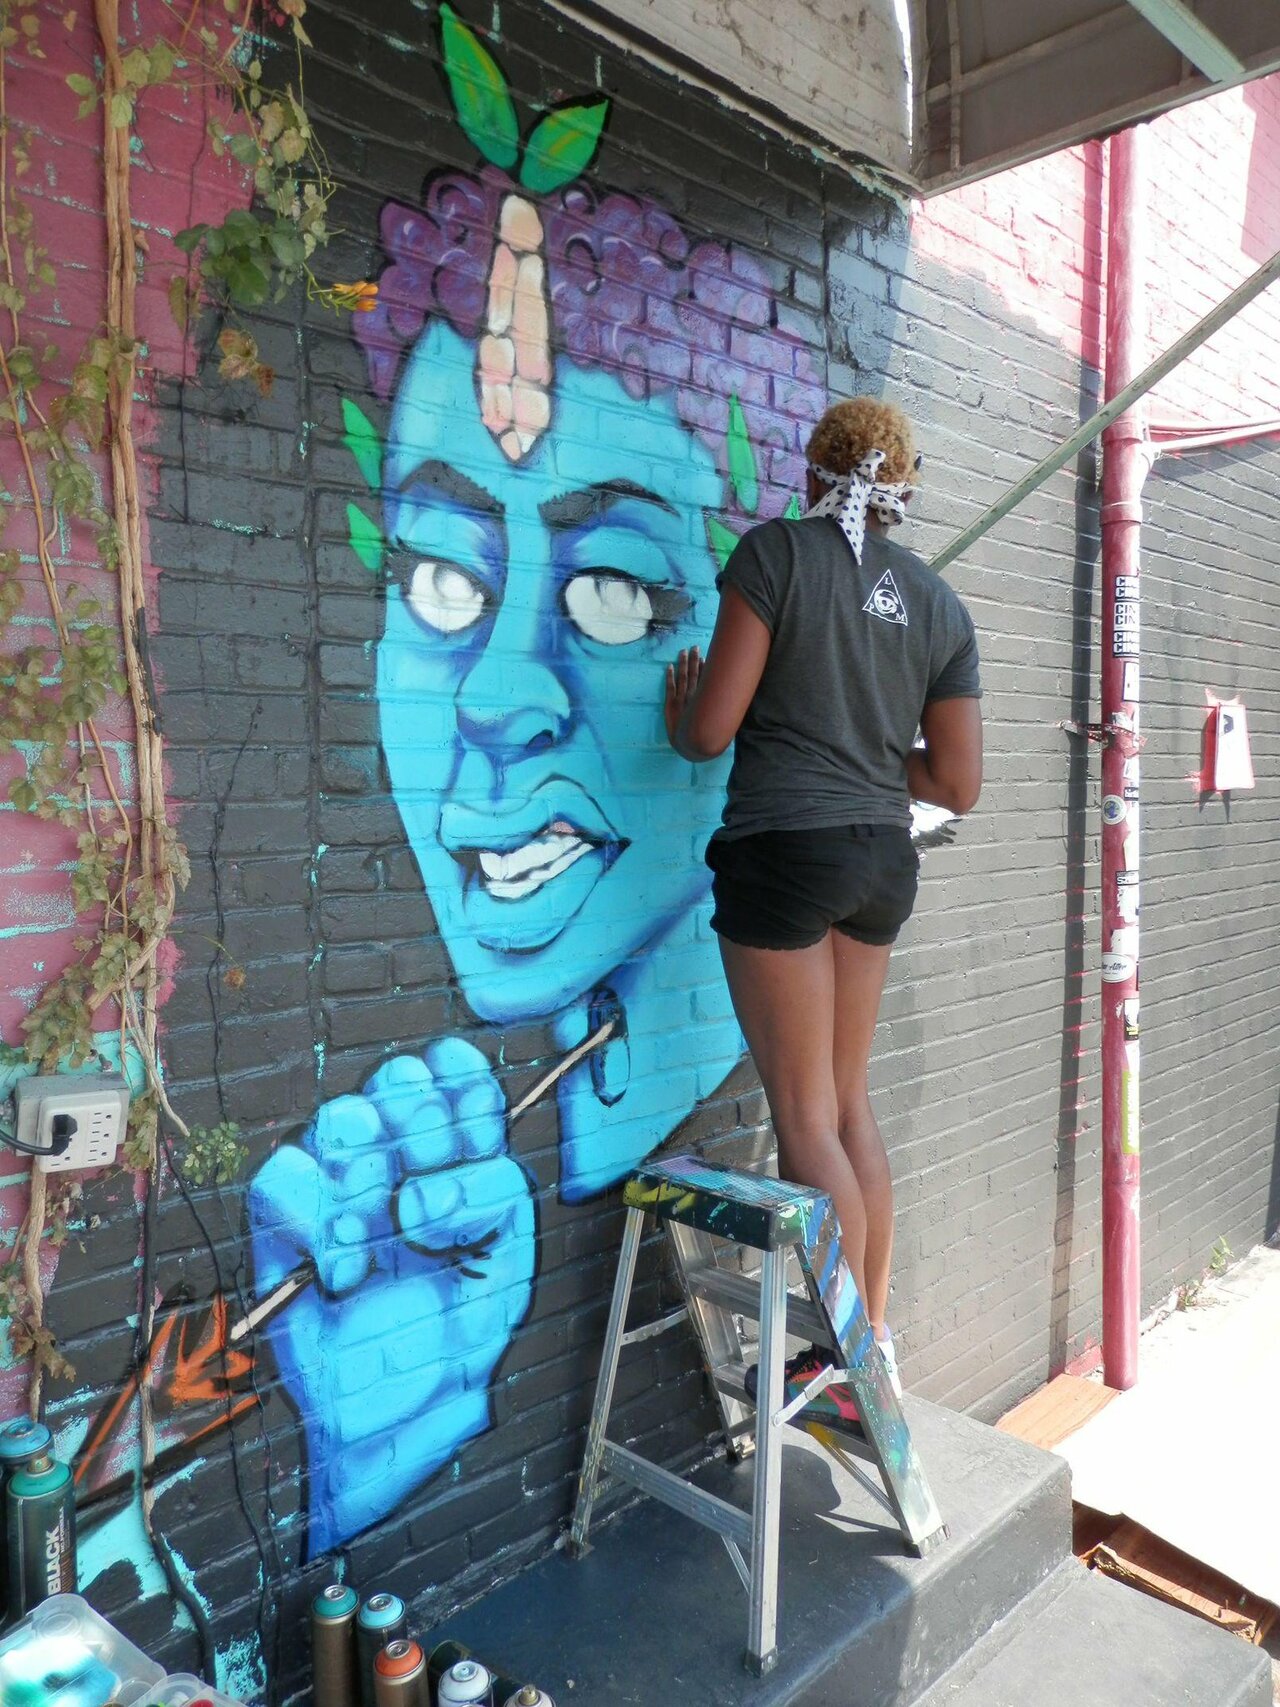 RT @JohnRMoffitt: #Houston #Graffiti #Streetart Roshi (Austin) working on her art at Super Happy Funland for Meeting of Styles 2015. http://t.co/HOUoXQVbQD